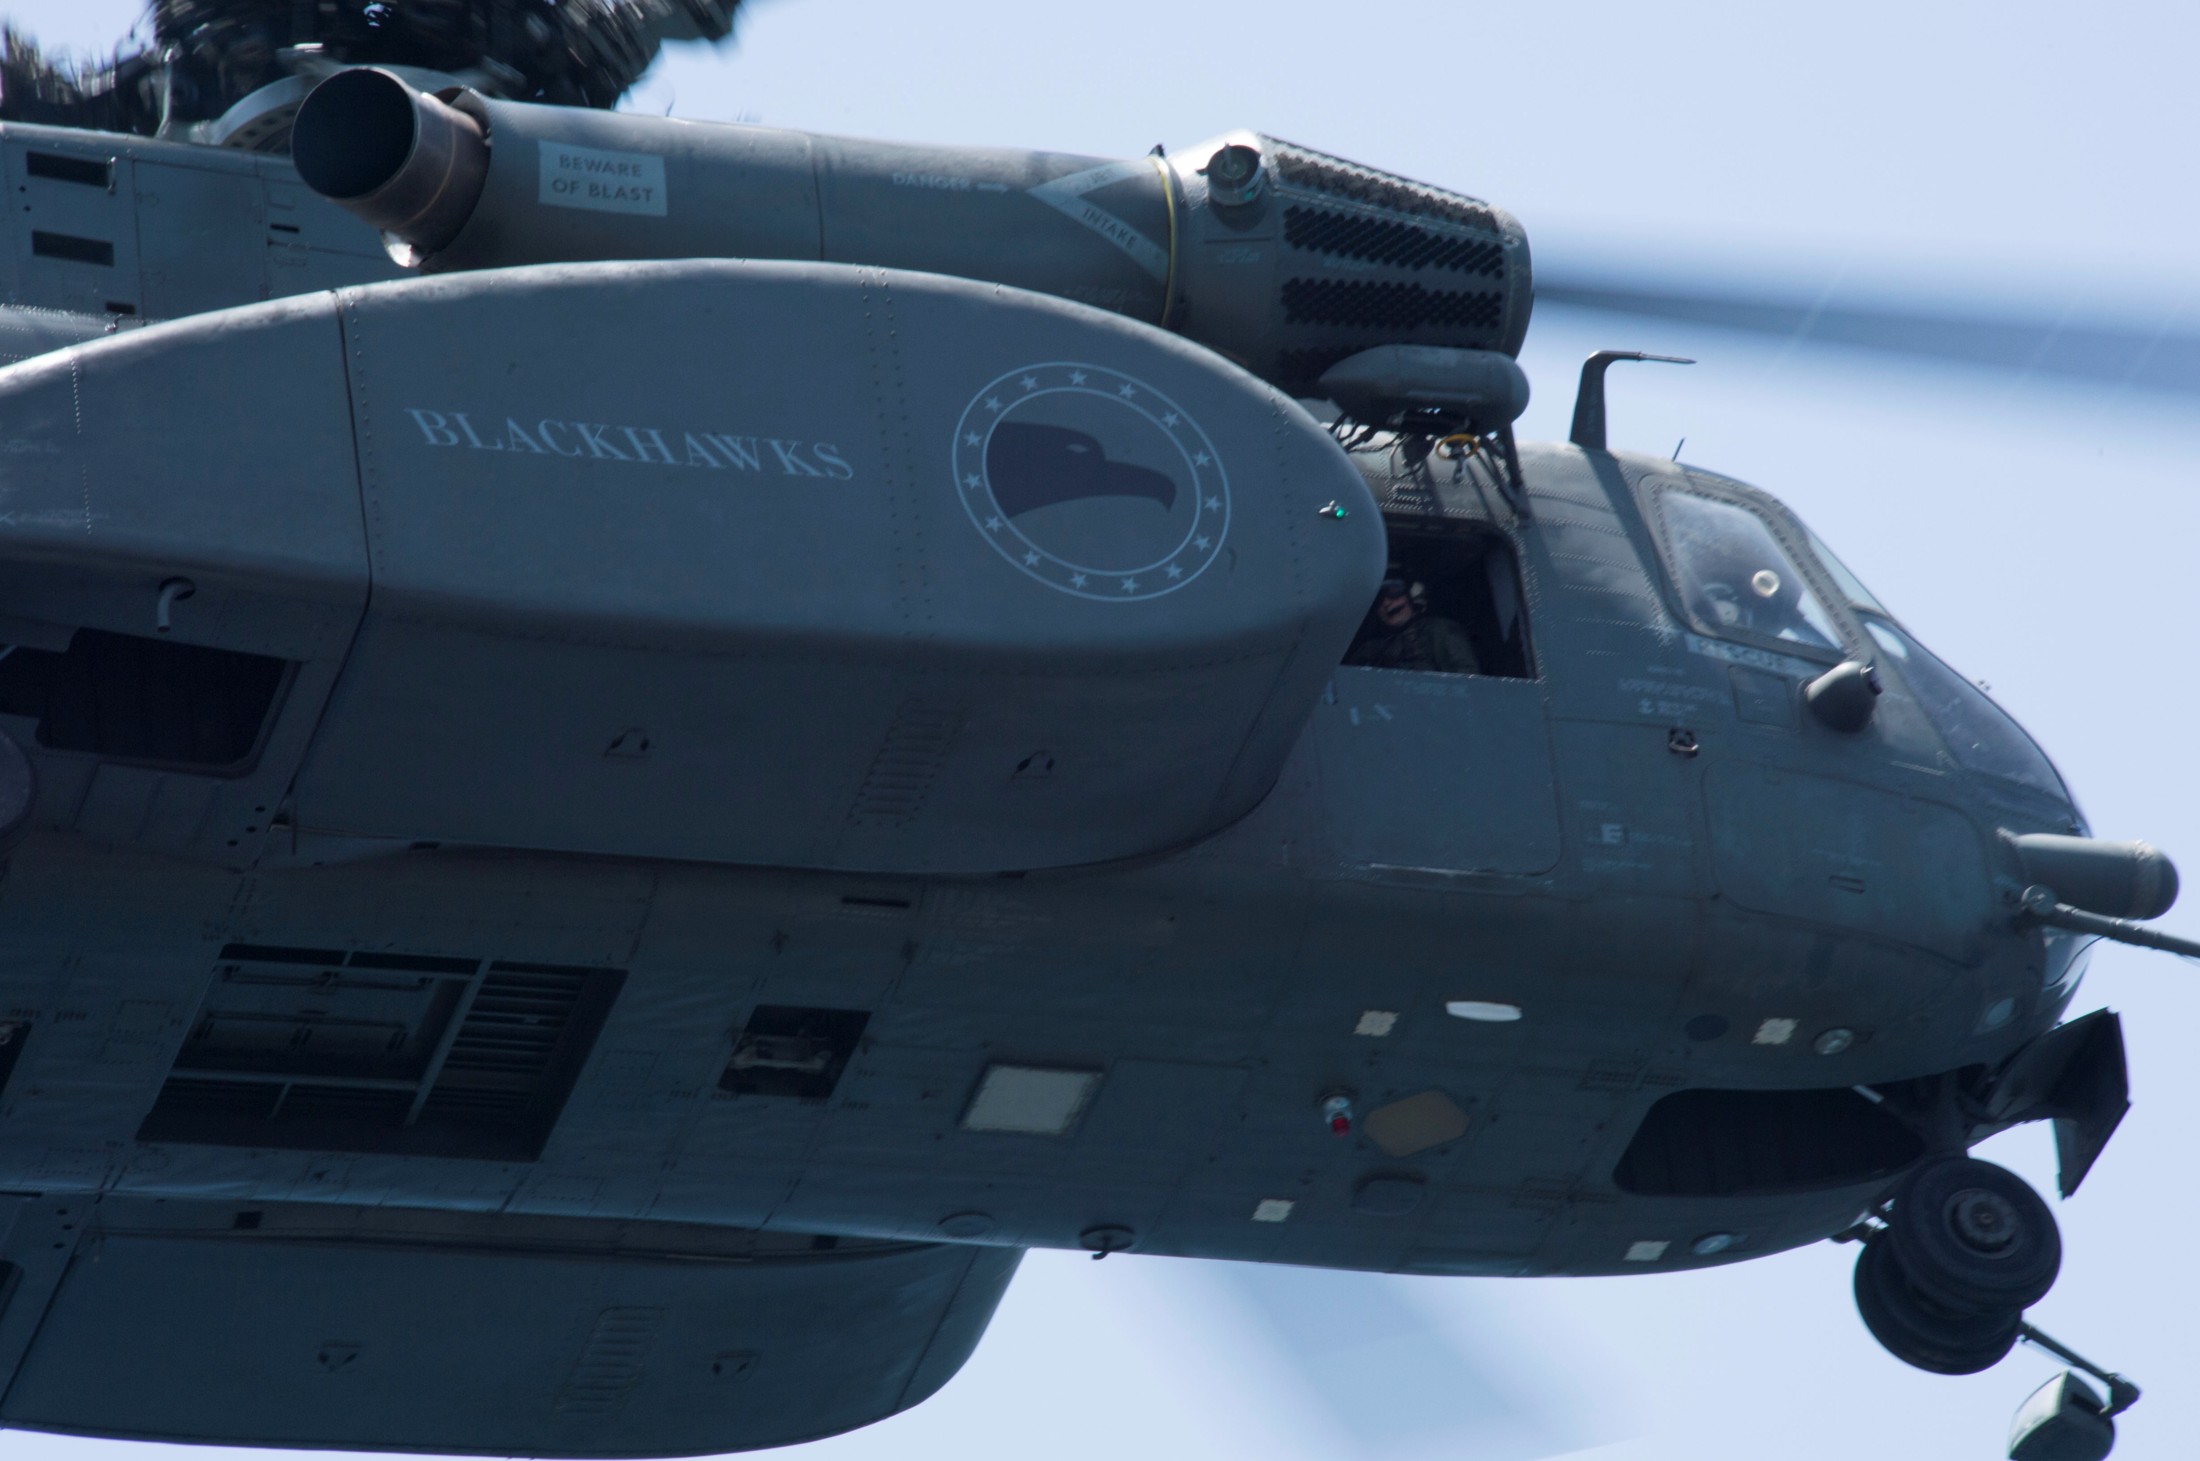 hm-15 blackhawks helicopter mine countermeasures squadron navy mh-53e sea dragon 122